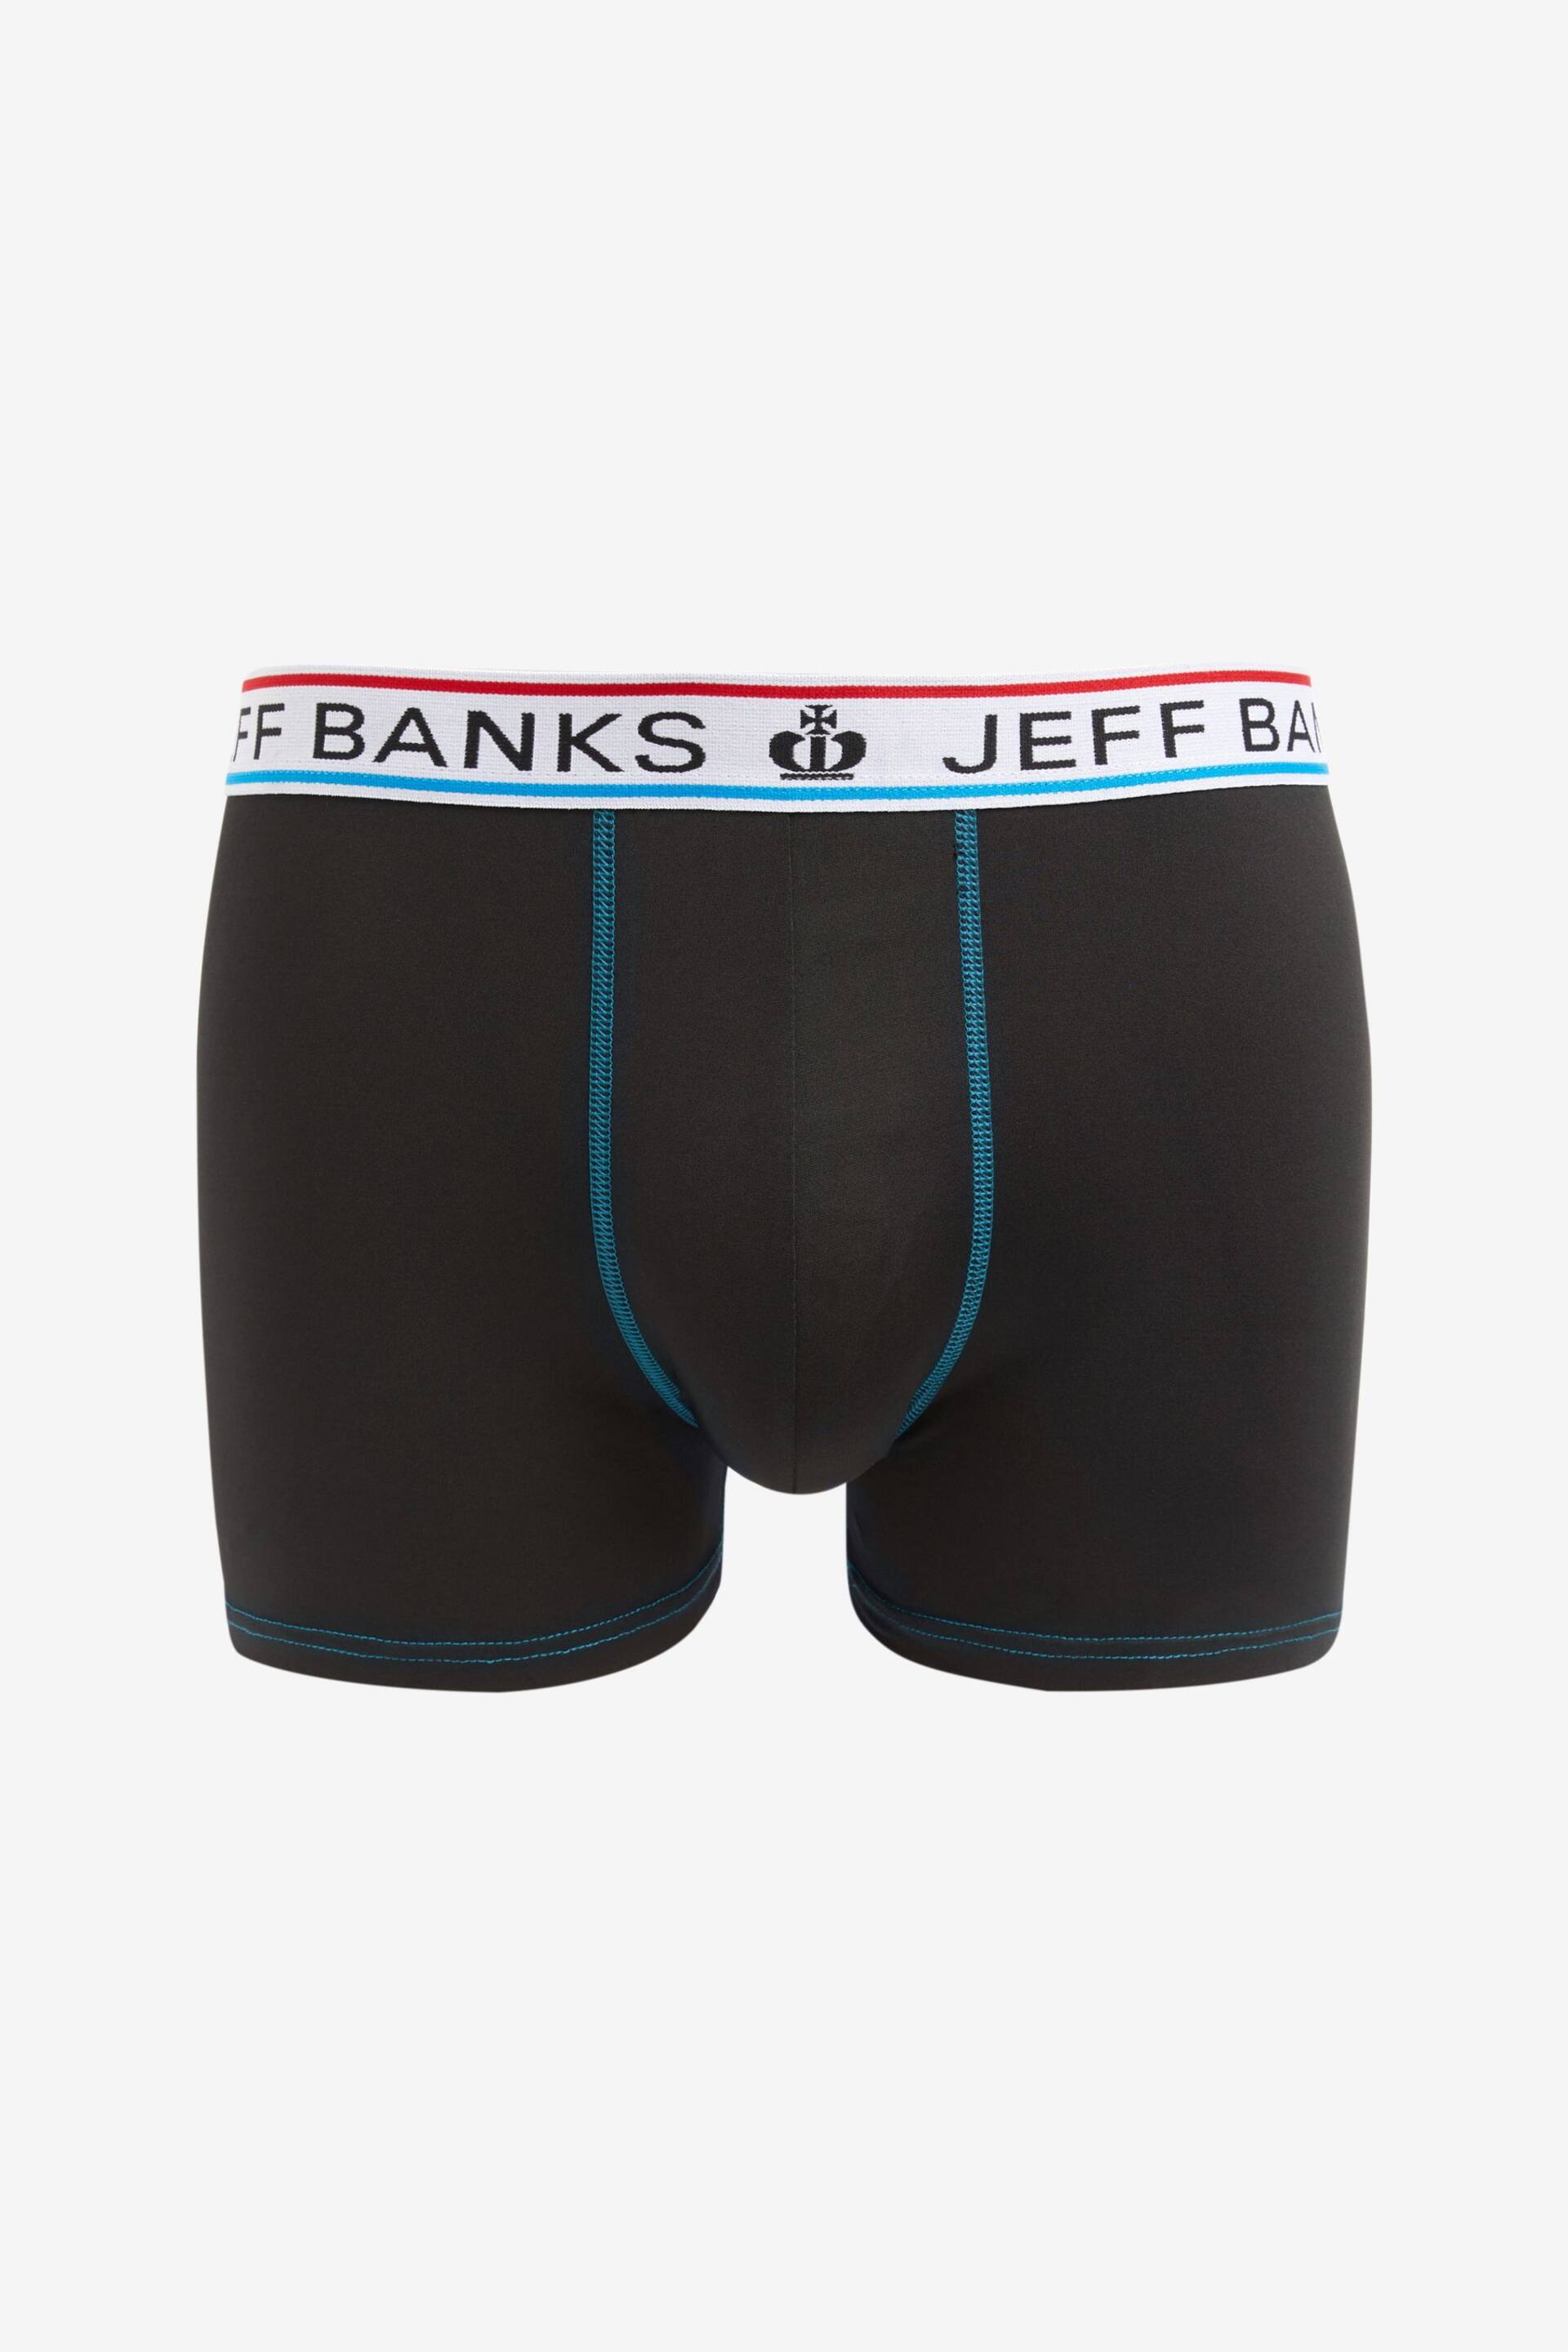 Jeff Banks Black Lightweight Super Smooth Sports Underwear 3 PK - Image 2 of 4